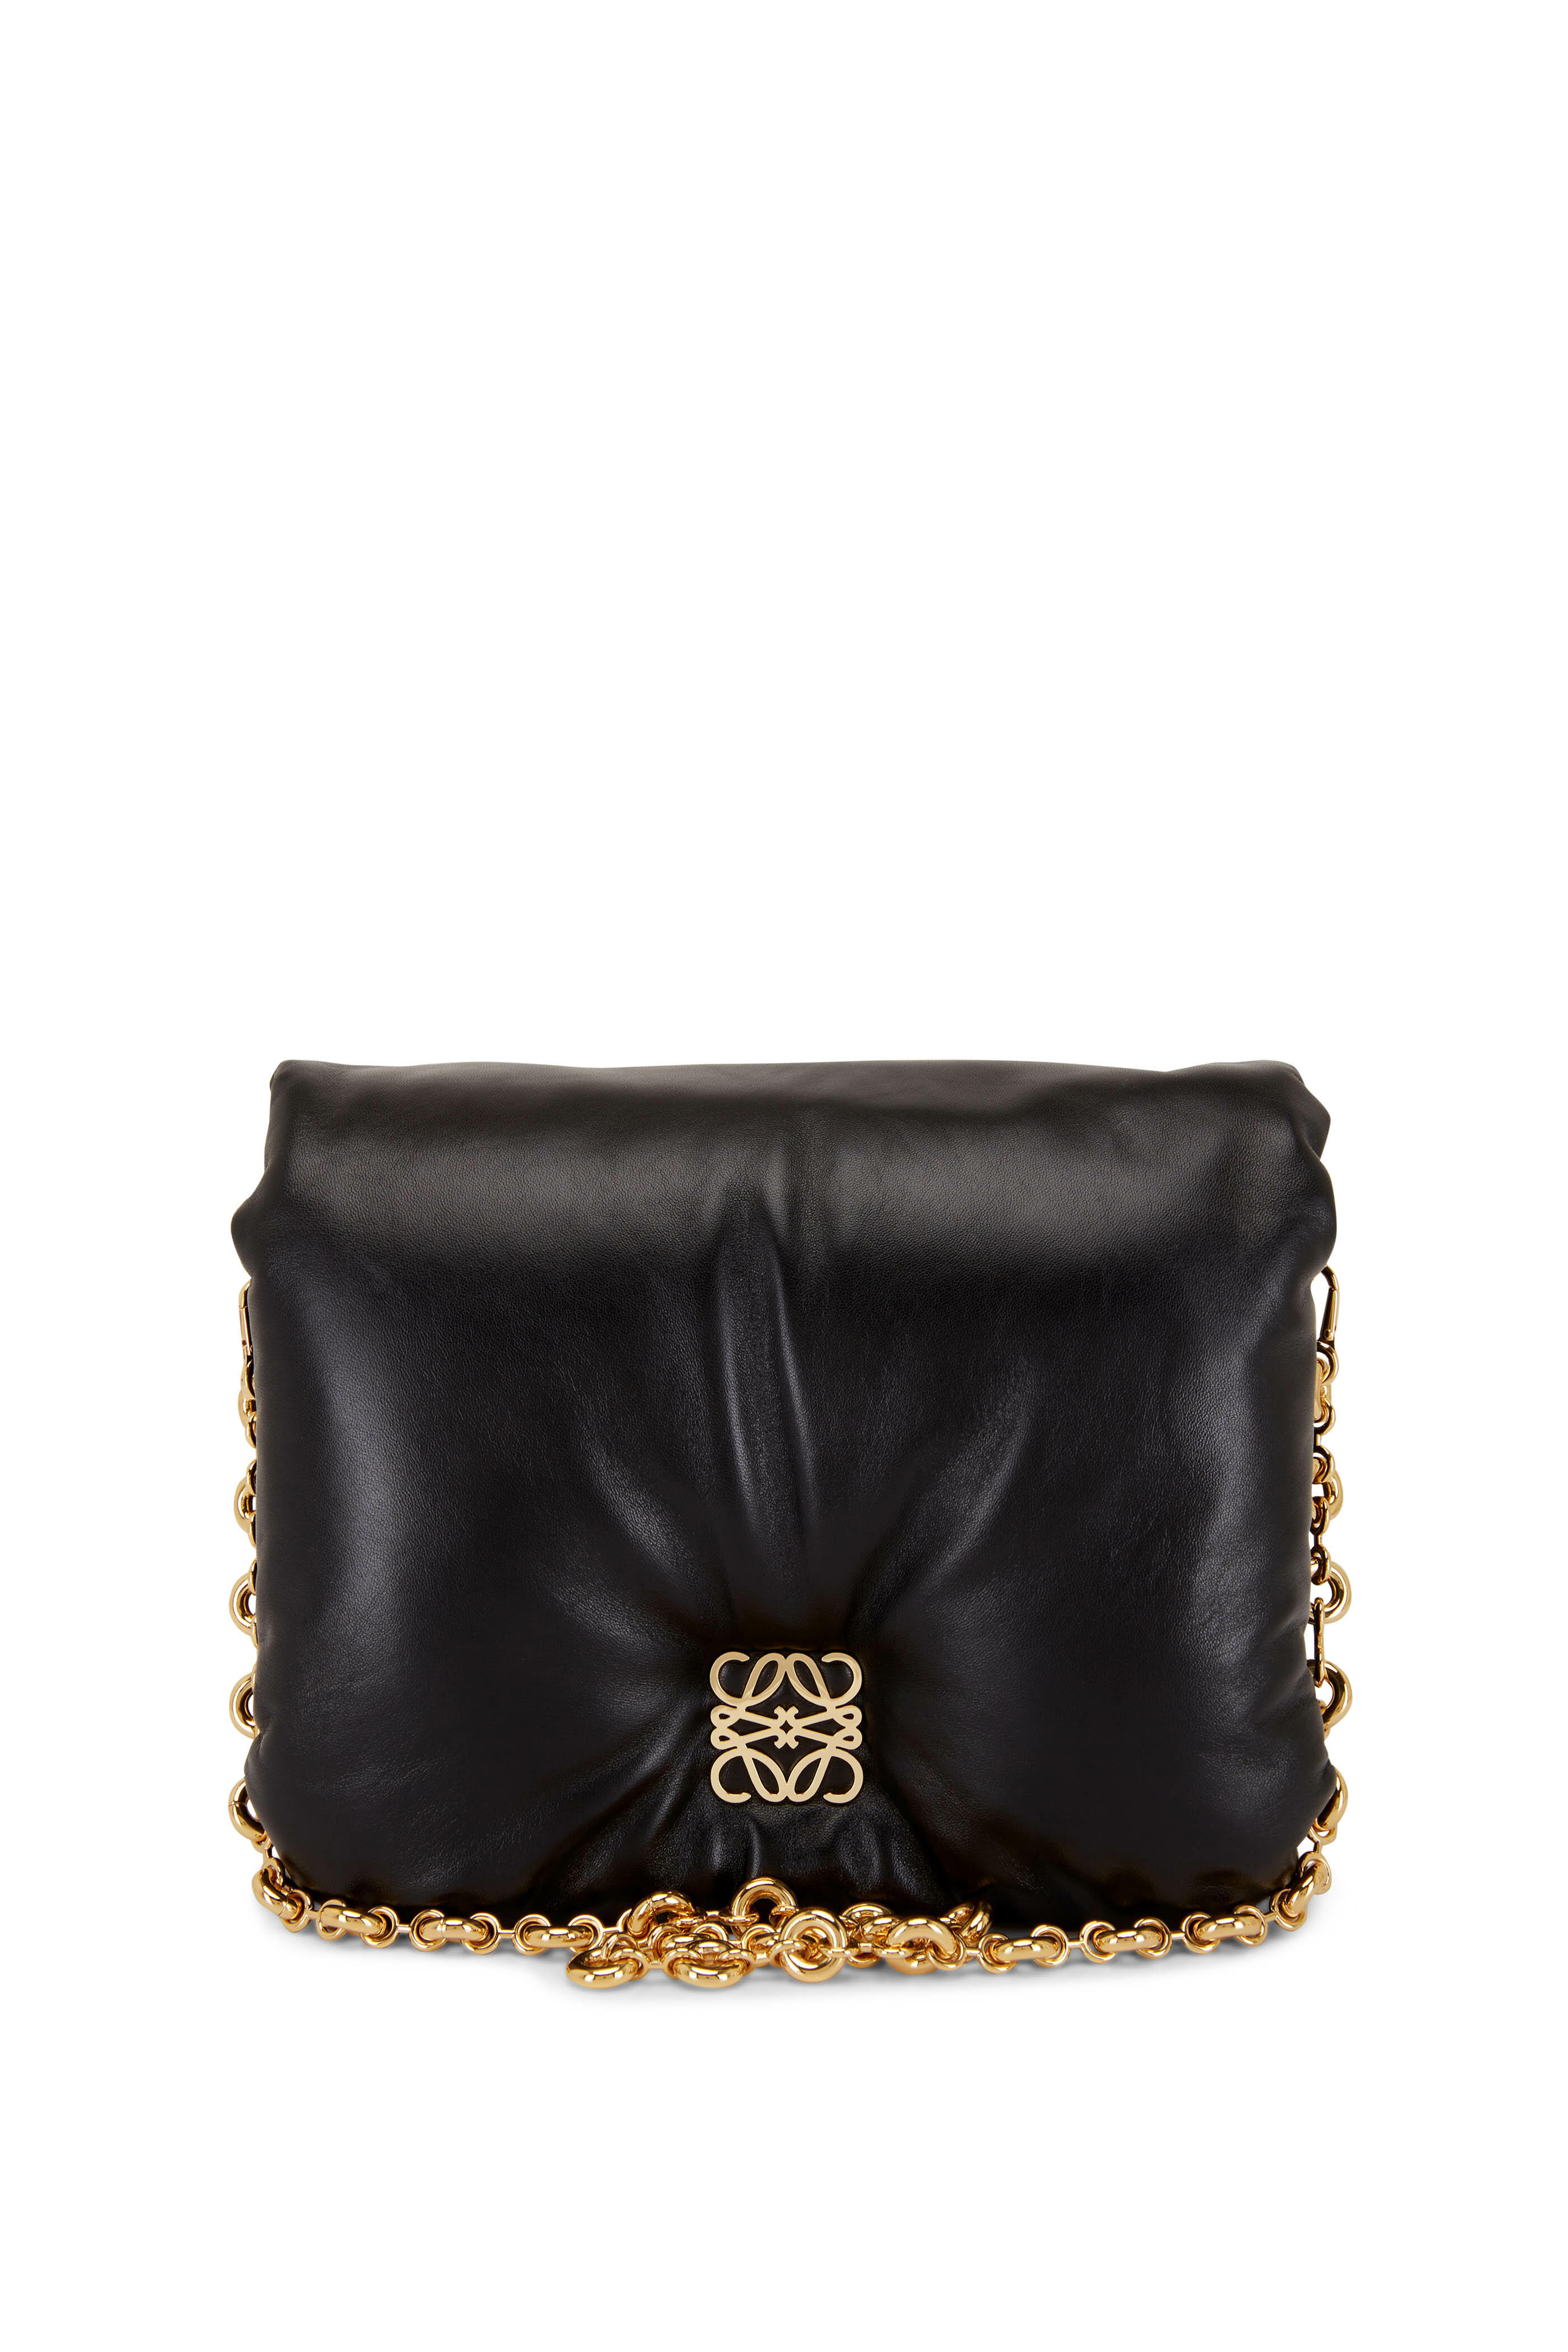 Loewe - Goya Black Leather Chain Puffer Bag | Mitchell Stores